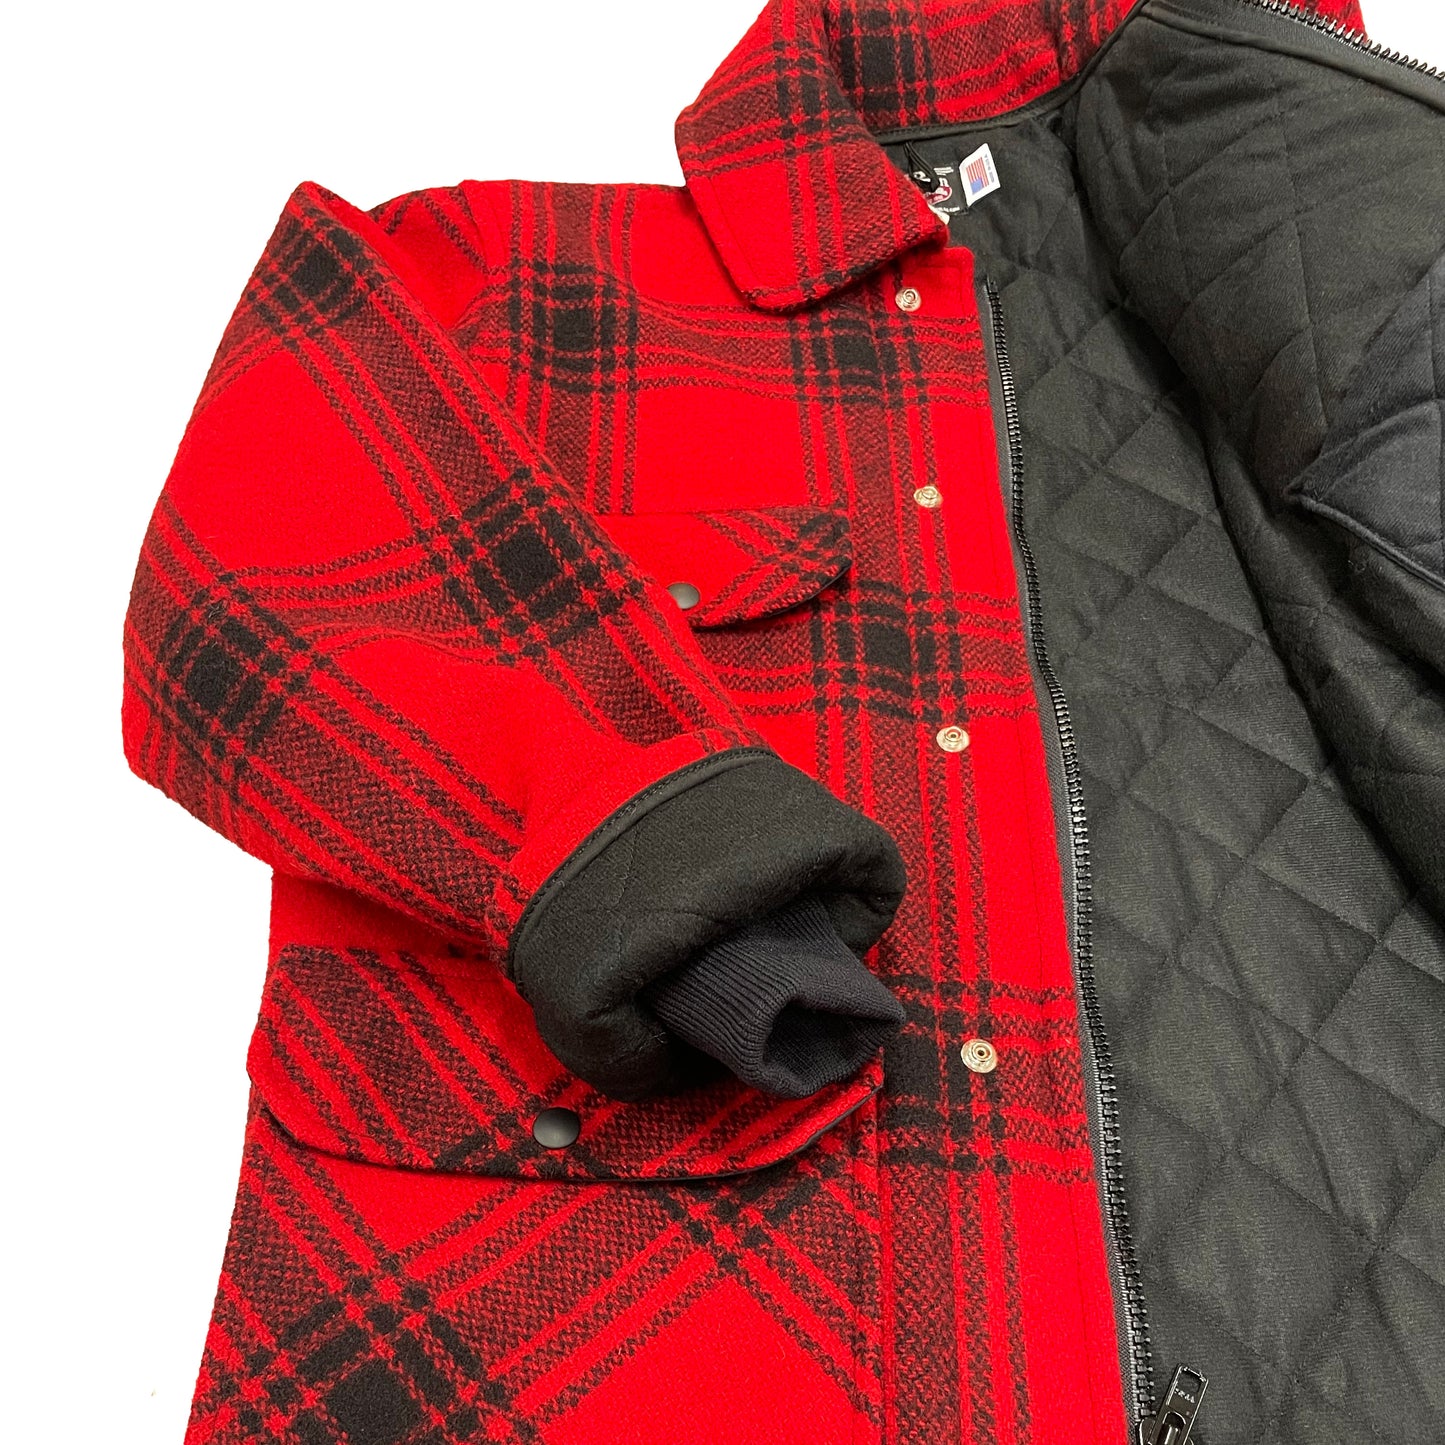 AZ 32 wool hunting coat cuff detail